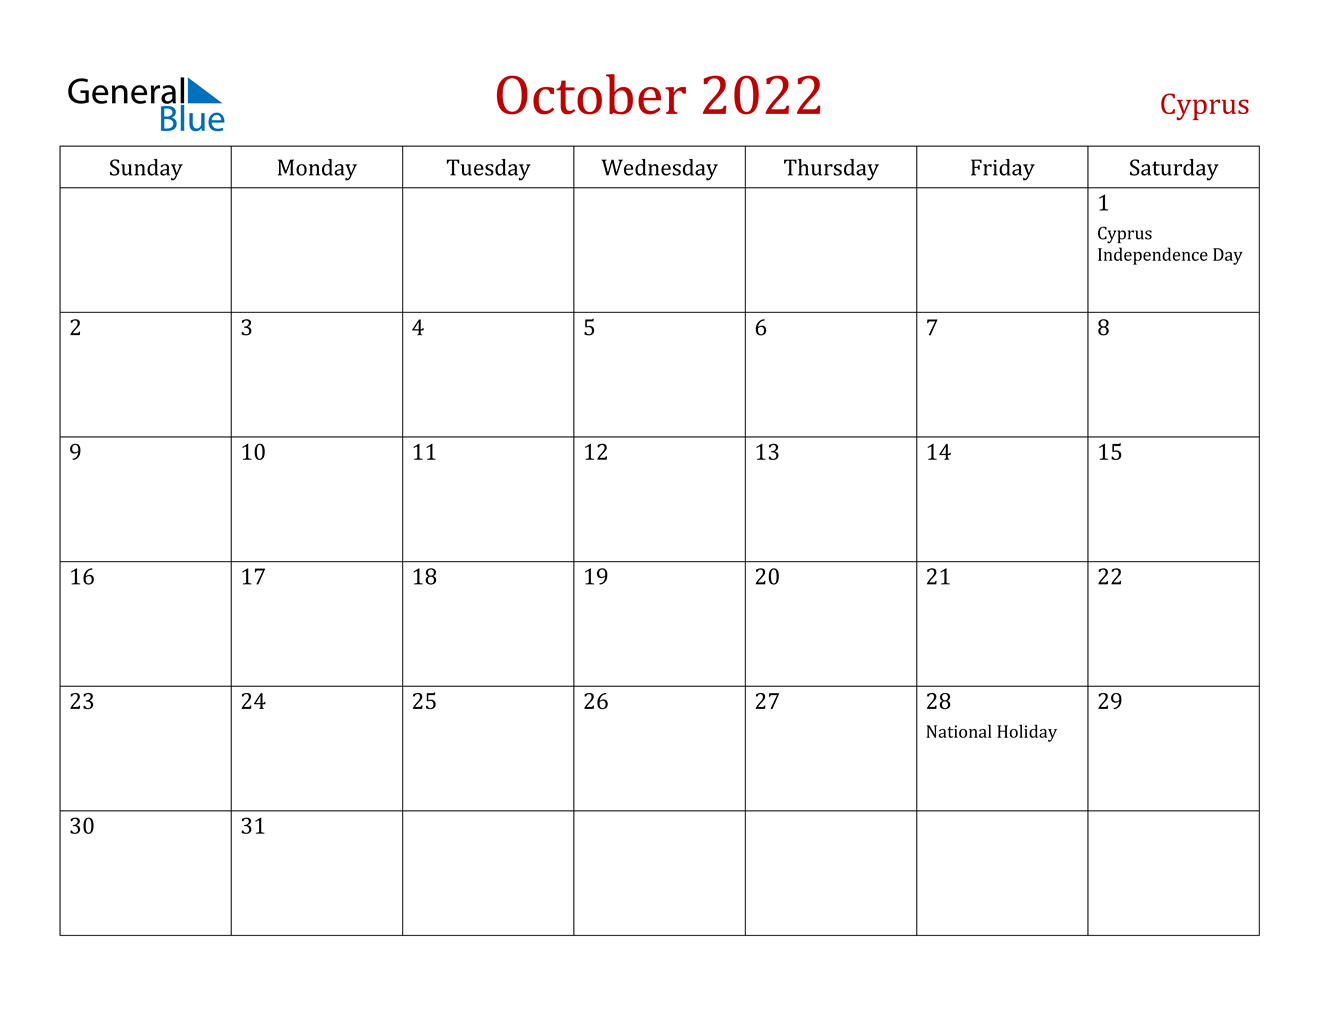 October 2022 Calendar - Cyprus